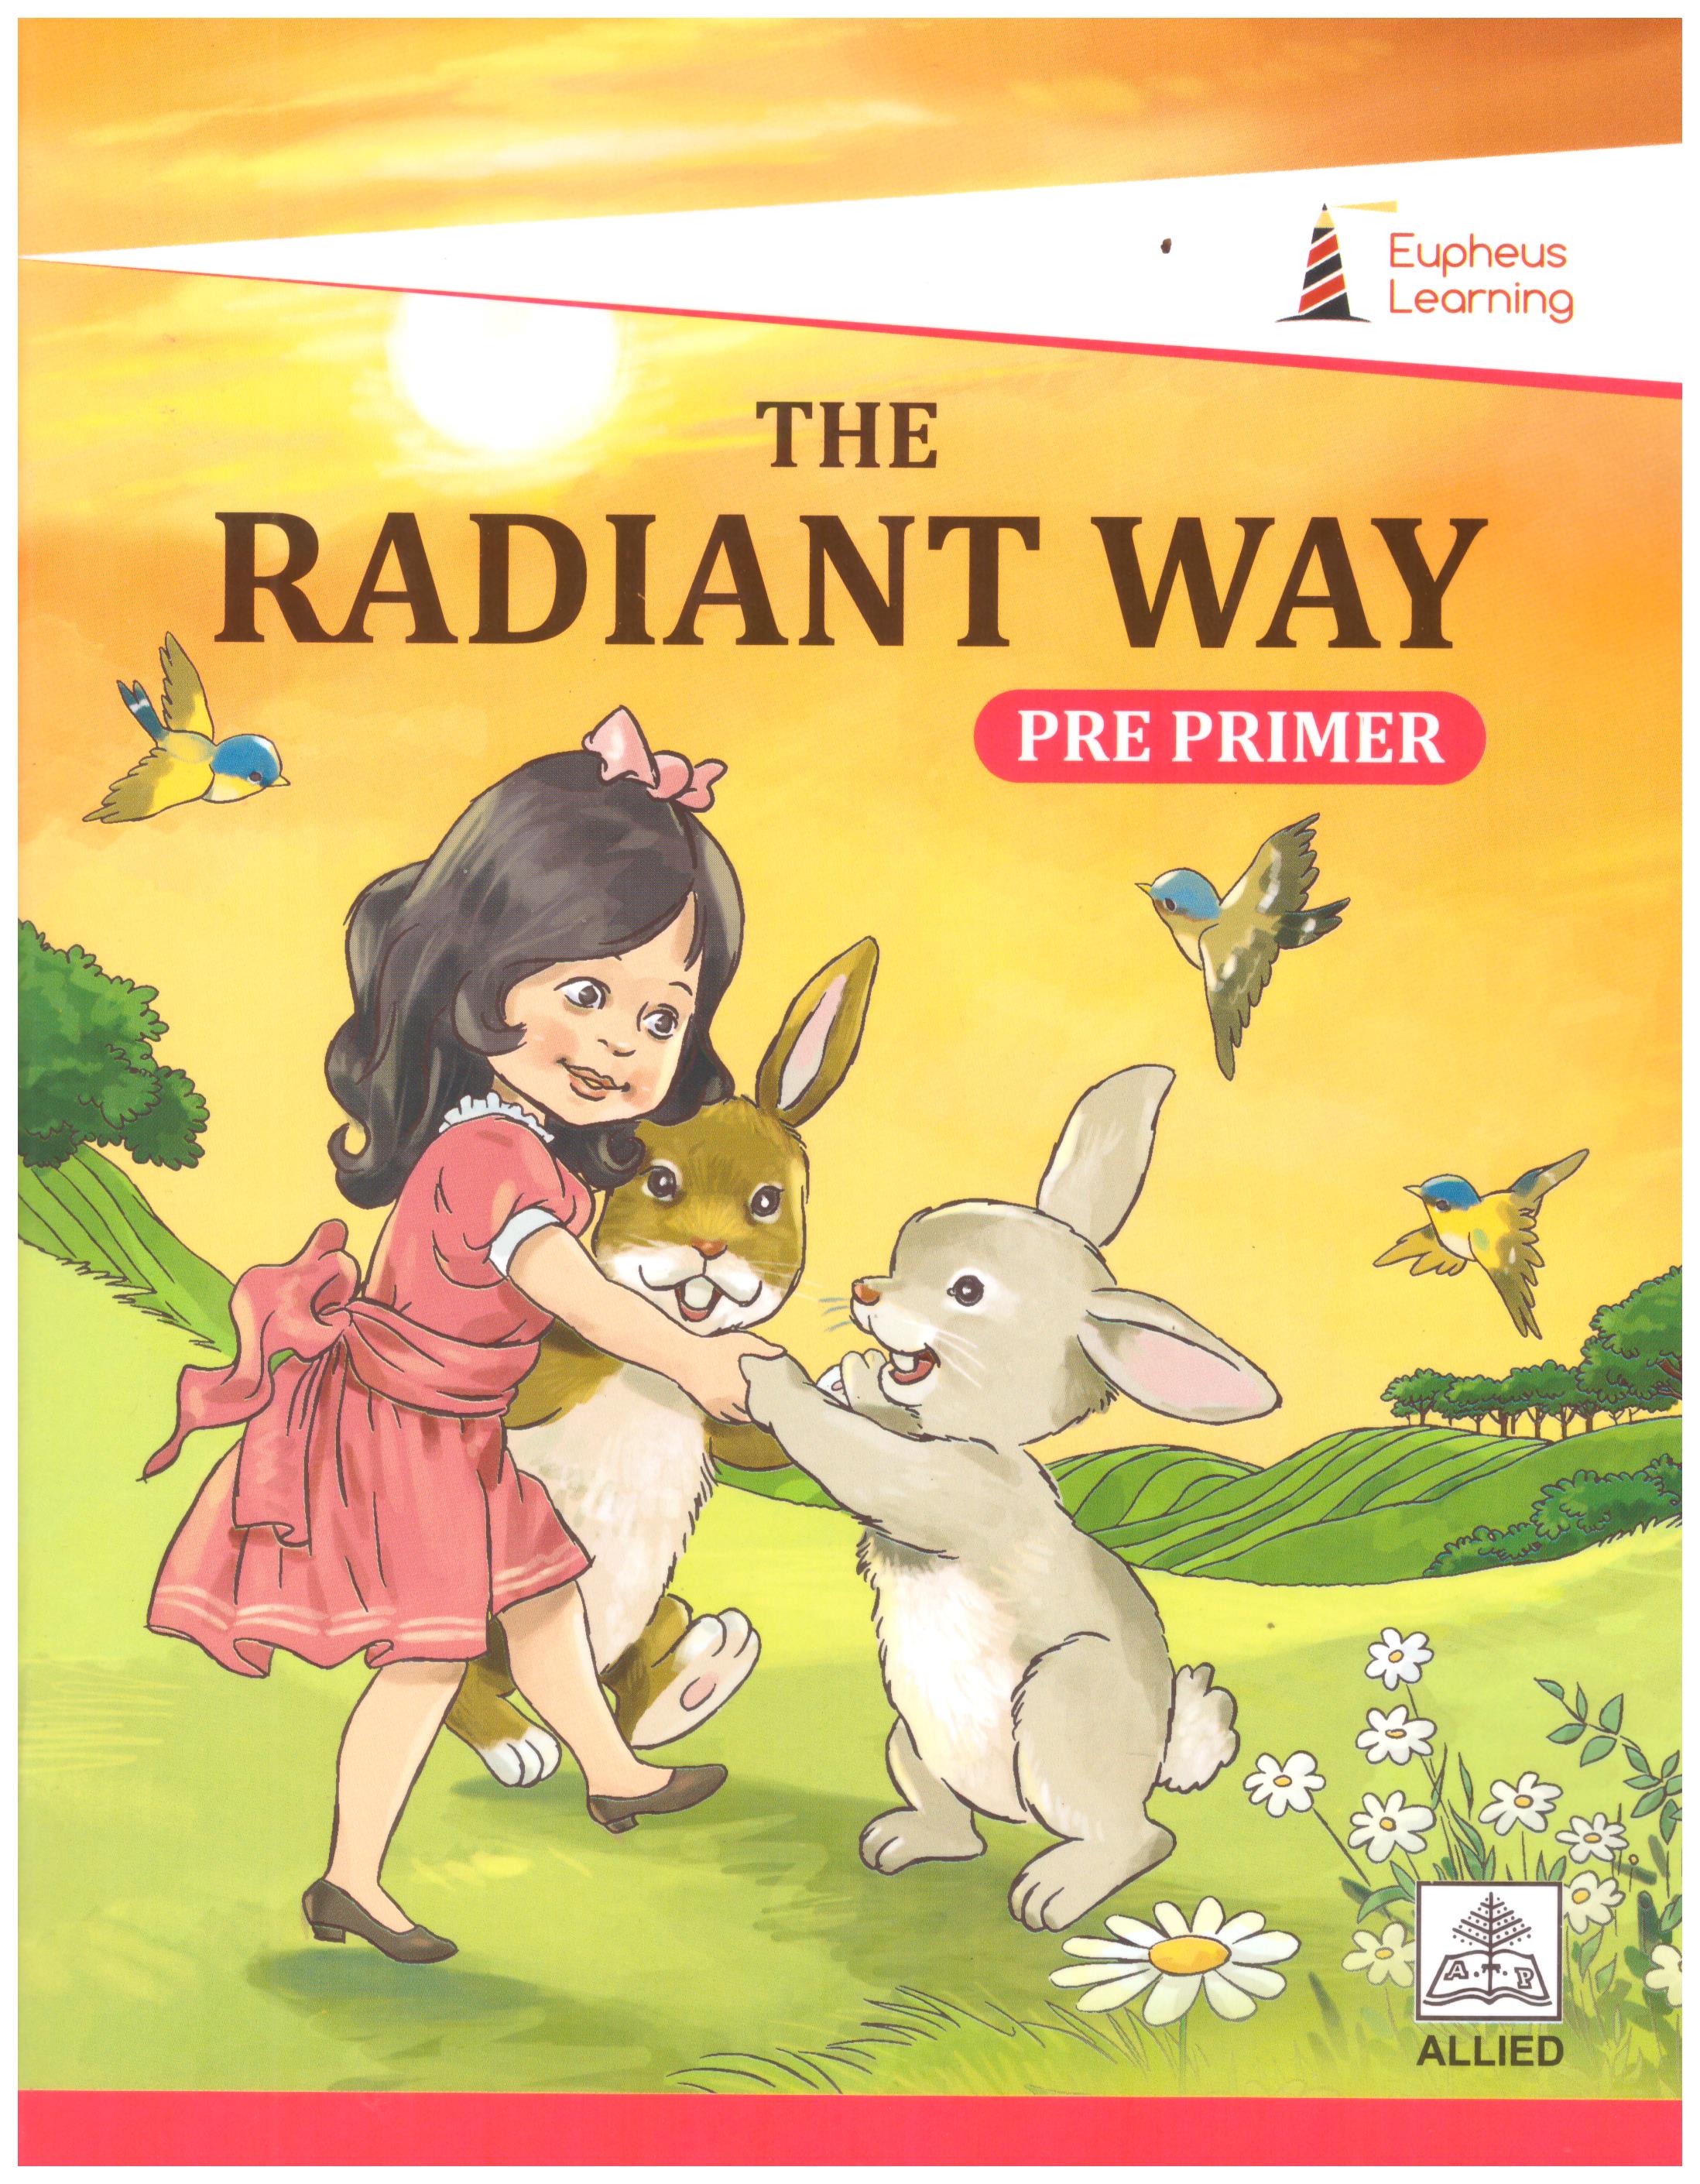 The Radiant Way Pre Primer